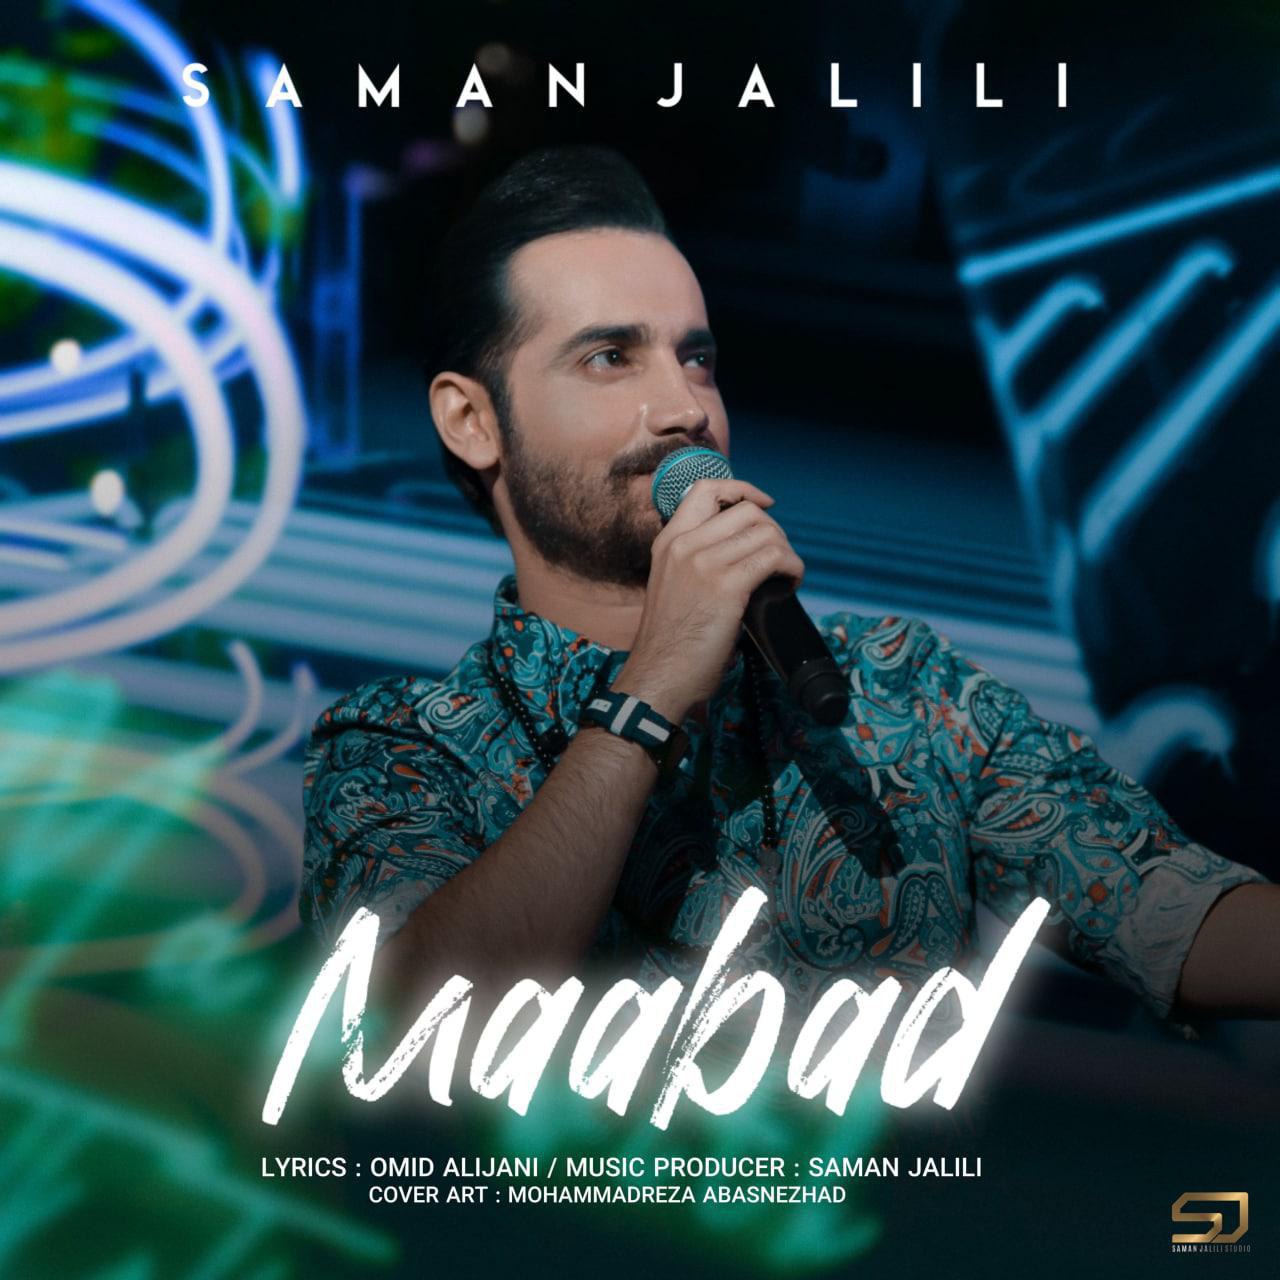 Saman Jalili - Maabad - دانلود آهنگ سامان جلیلی به نام معبد 